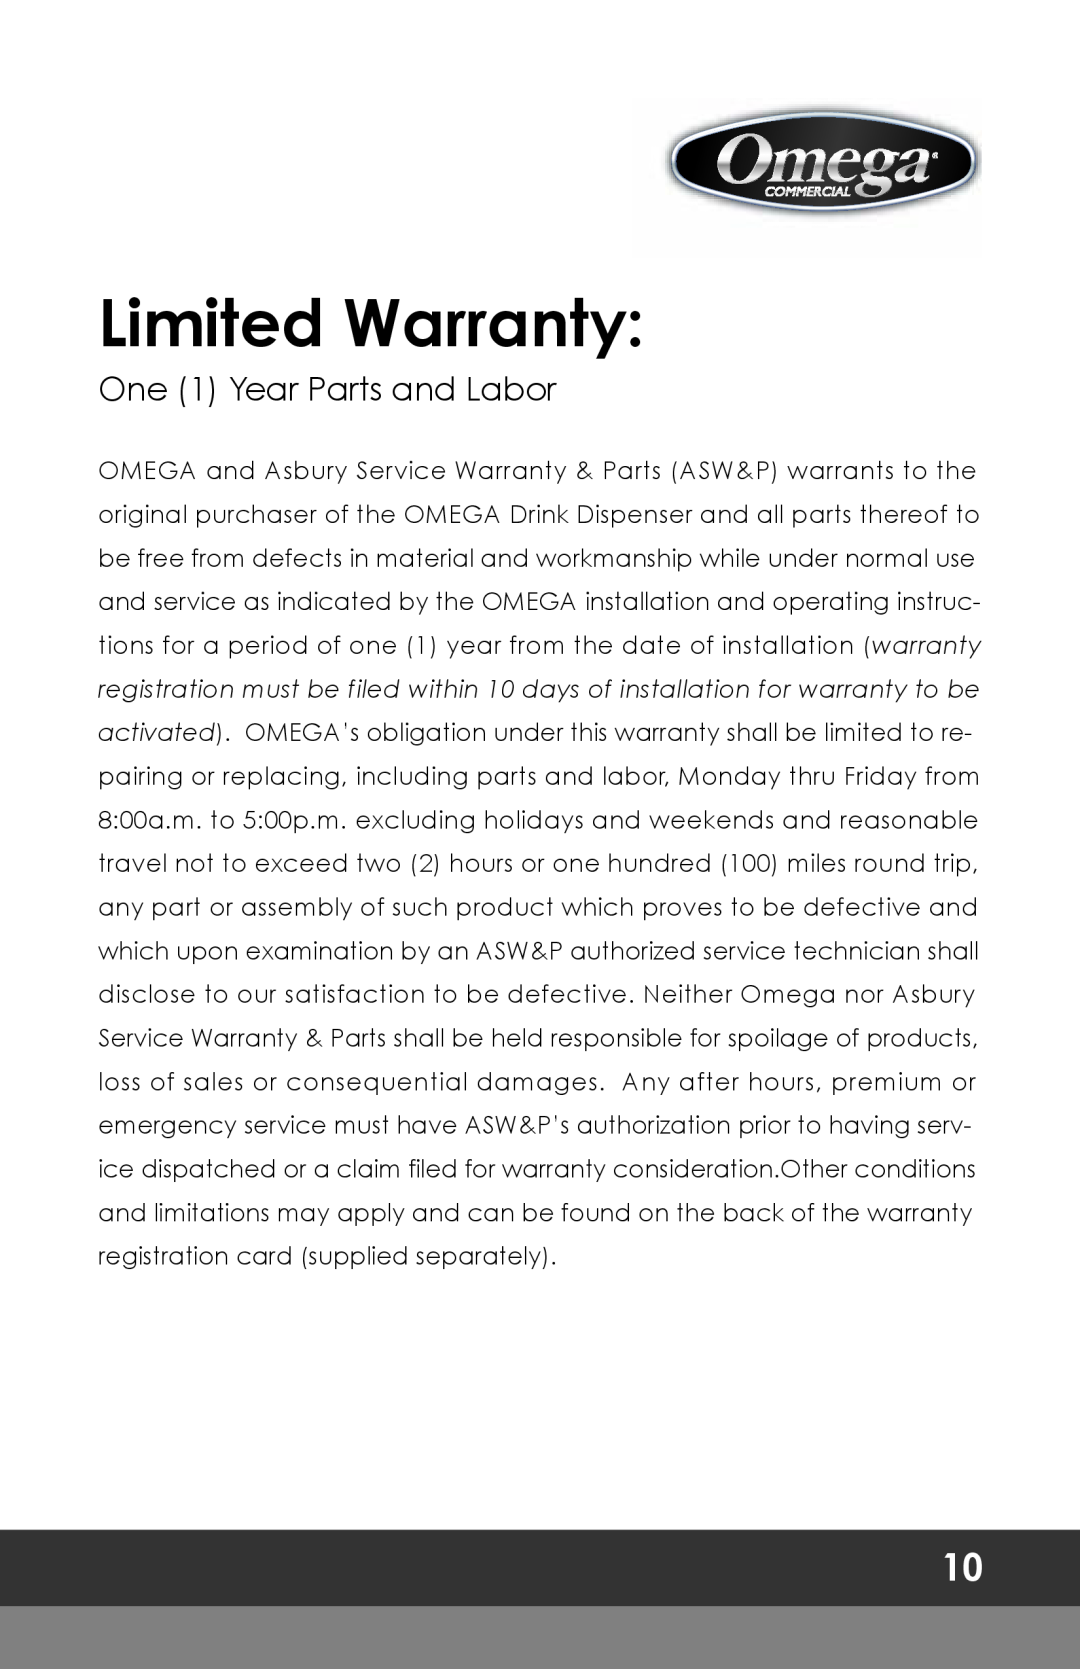 Omega OSD30, OSD20, OSD10 instruction manual Limited Warranty, One 1 Year Parts and Labor 